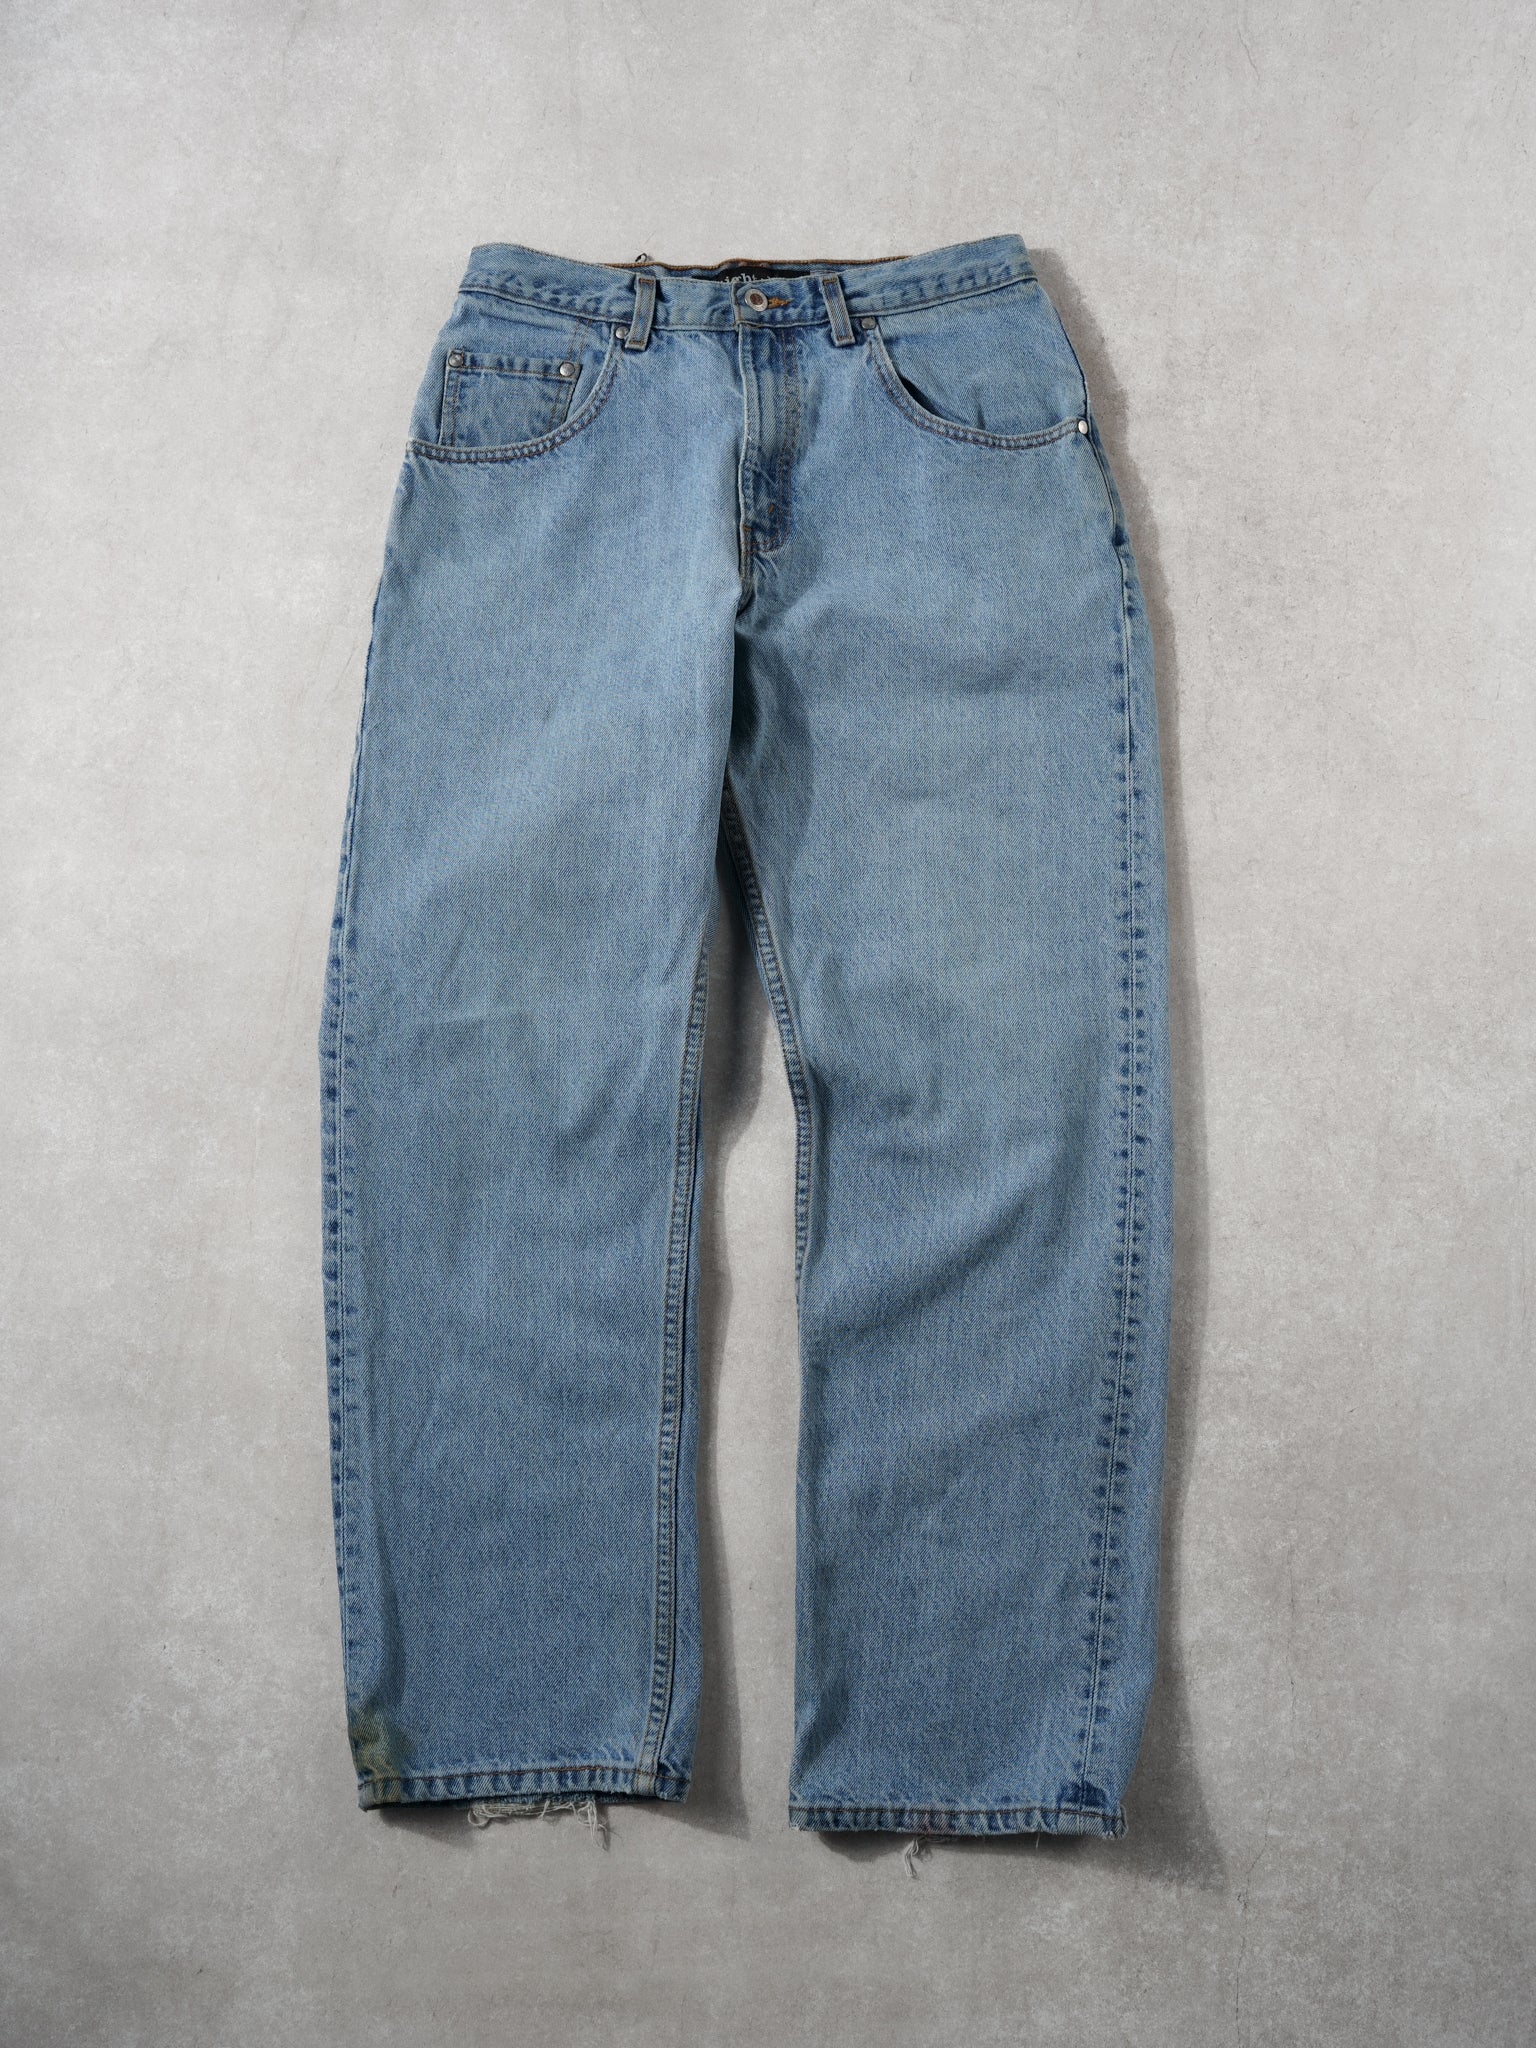 Vintage 90s Light Blue Silver Tab Levi's  Denim Jeans (30x31)